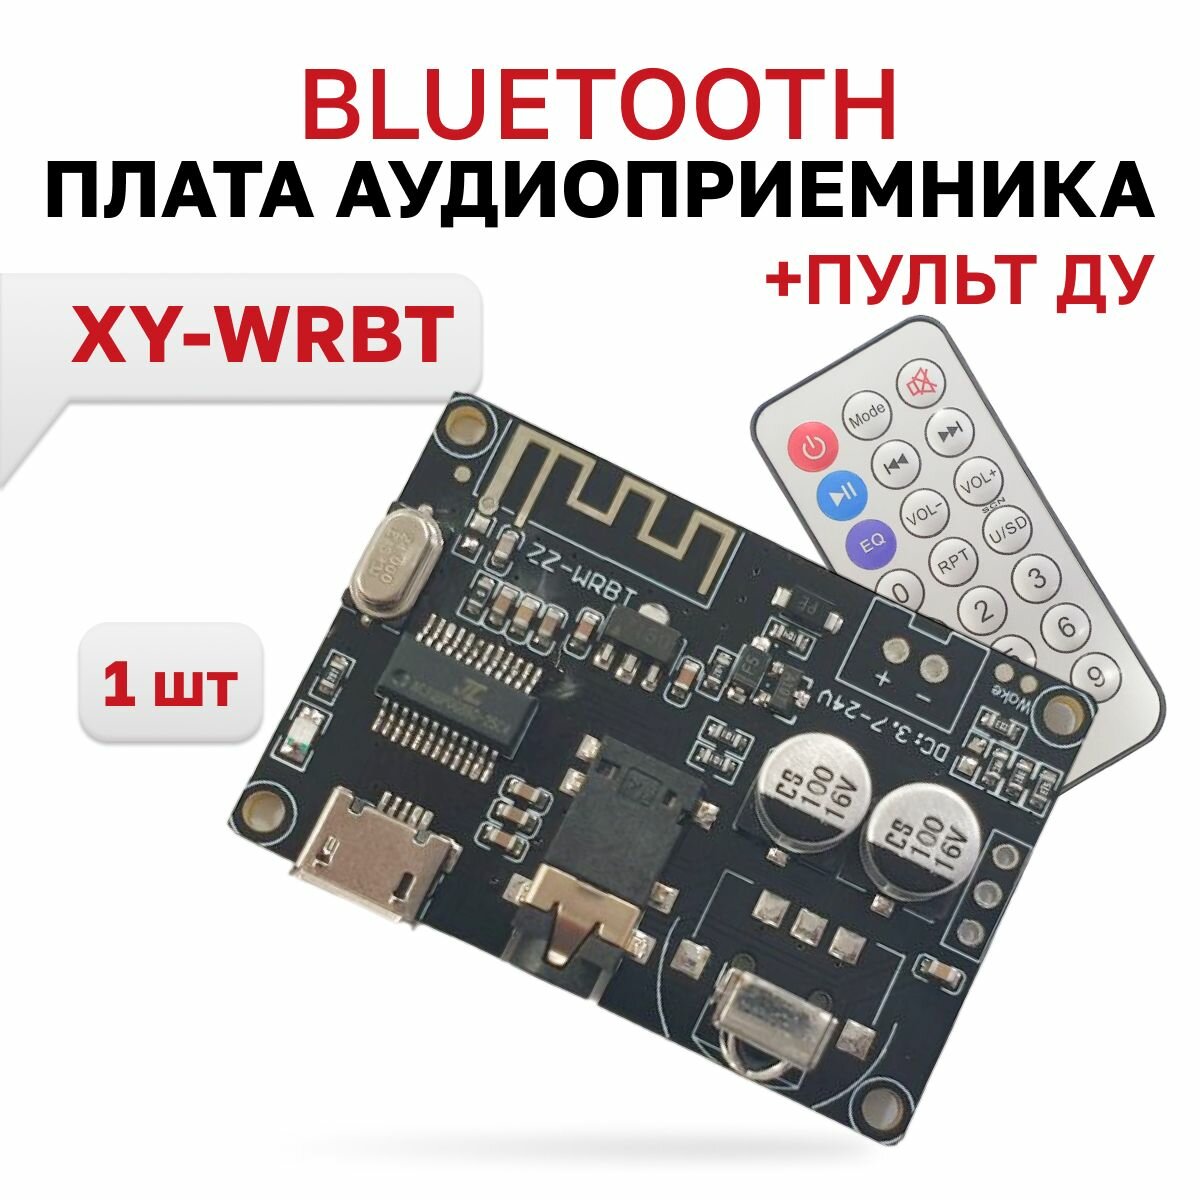 Модуль MP3 Bluetooth (XY-WRBT) Bluetooth приемник декодер плата пульт ду 1 шт.